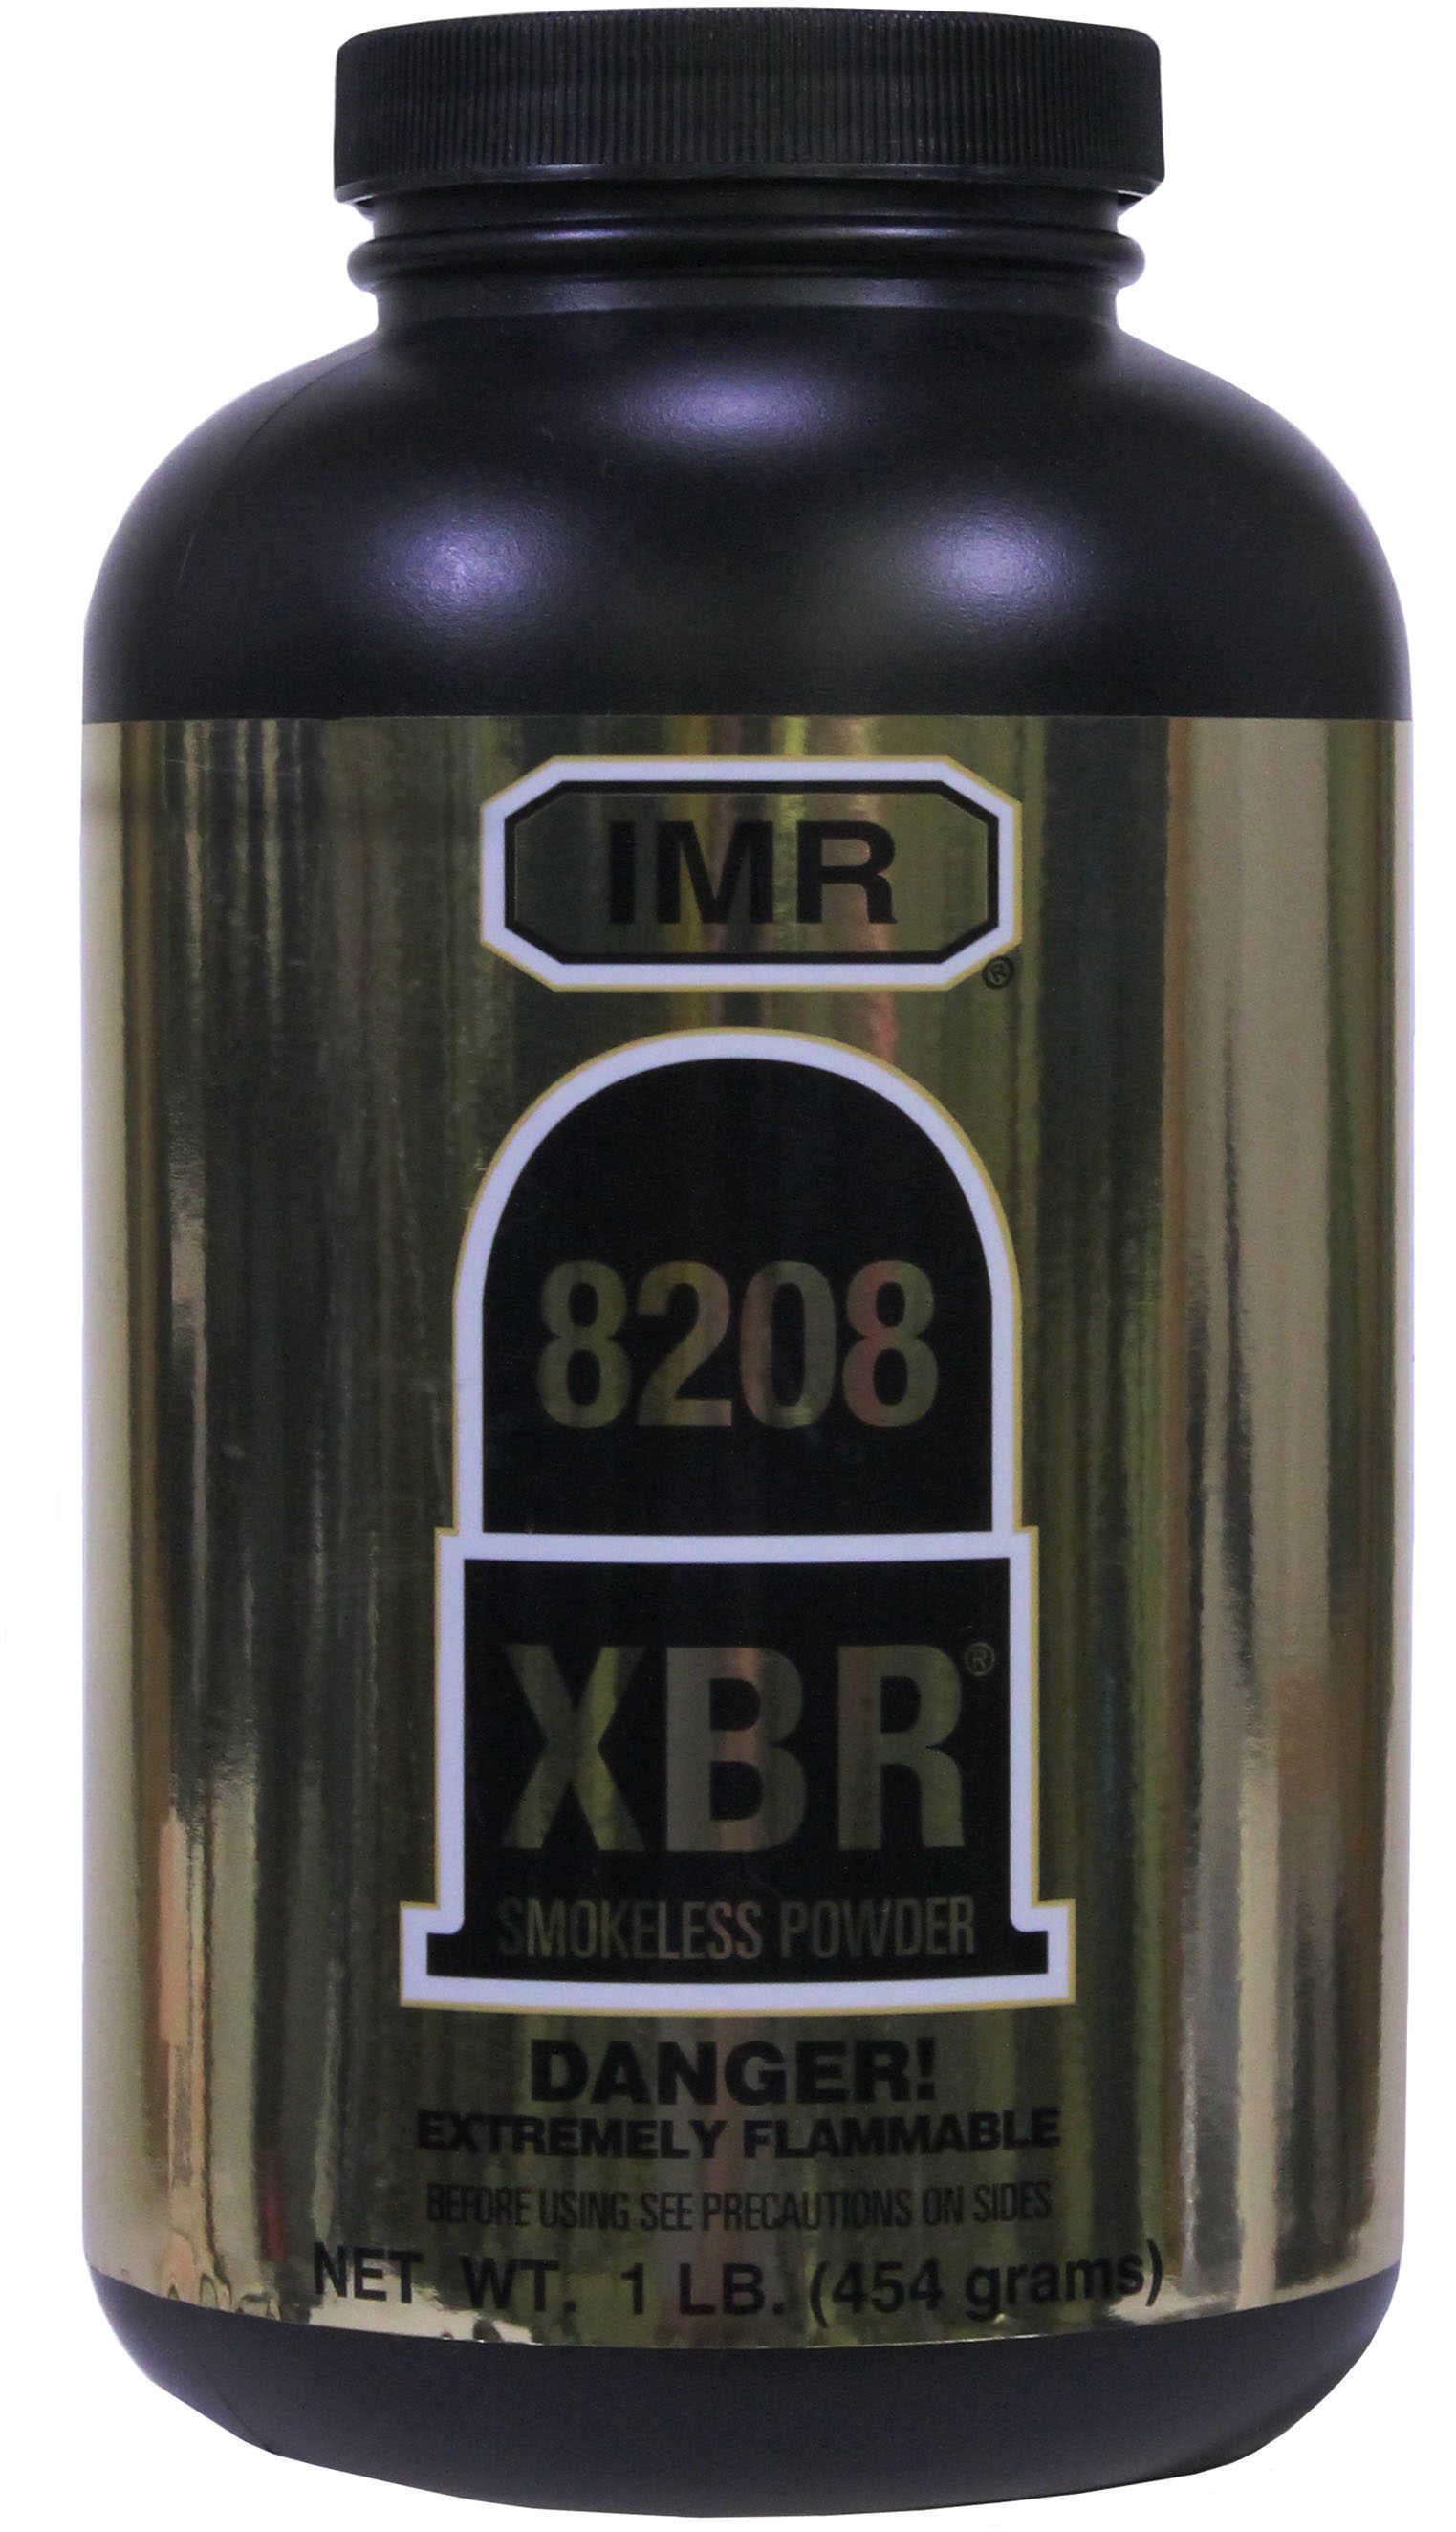 IMR Legendary Powders 8208 XBR 1Lb